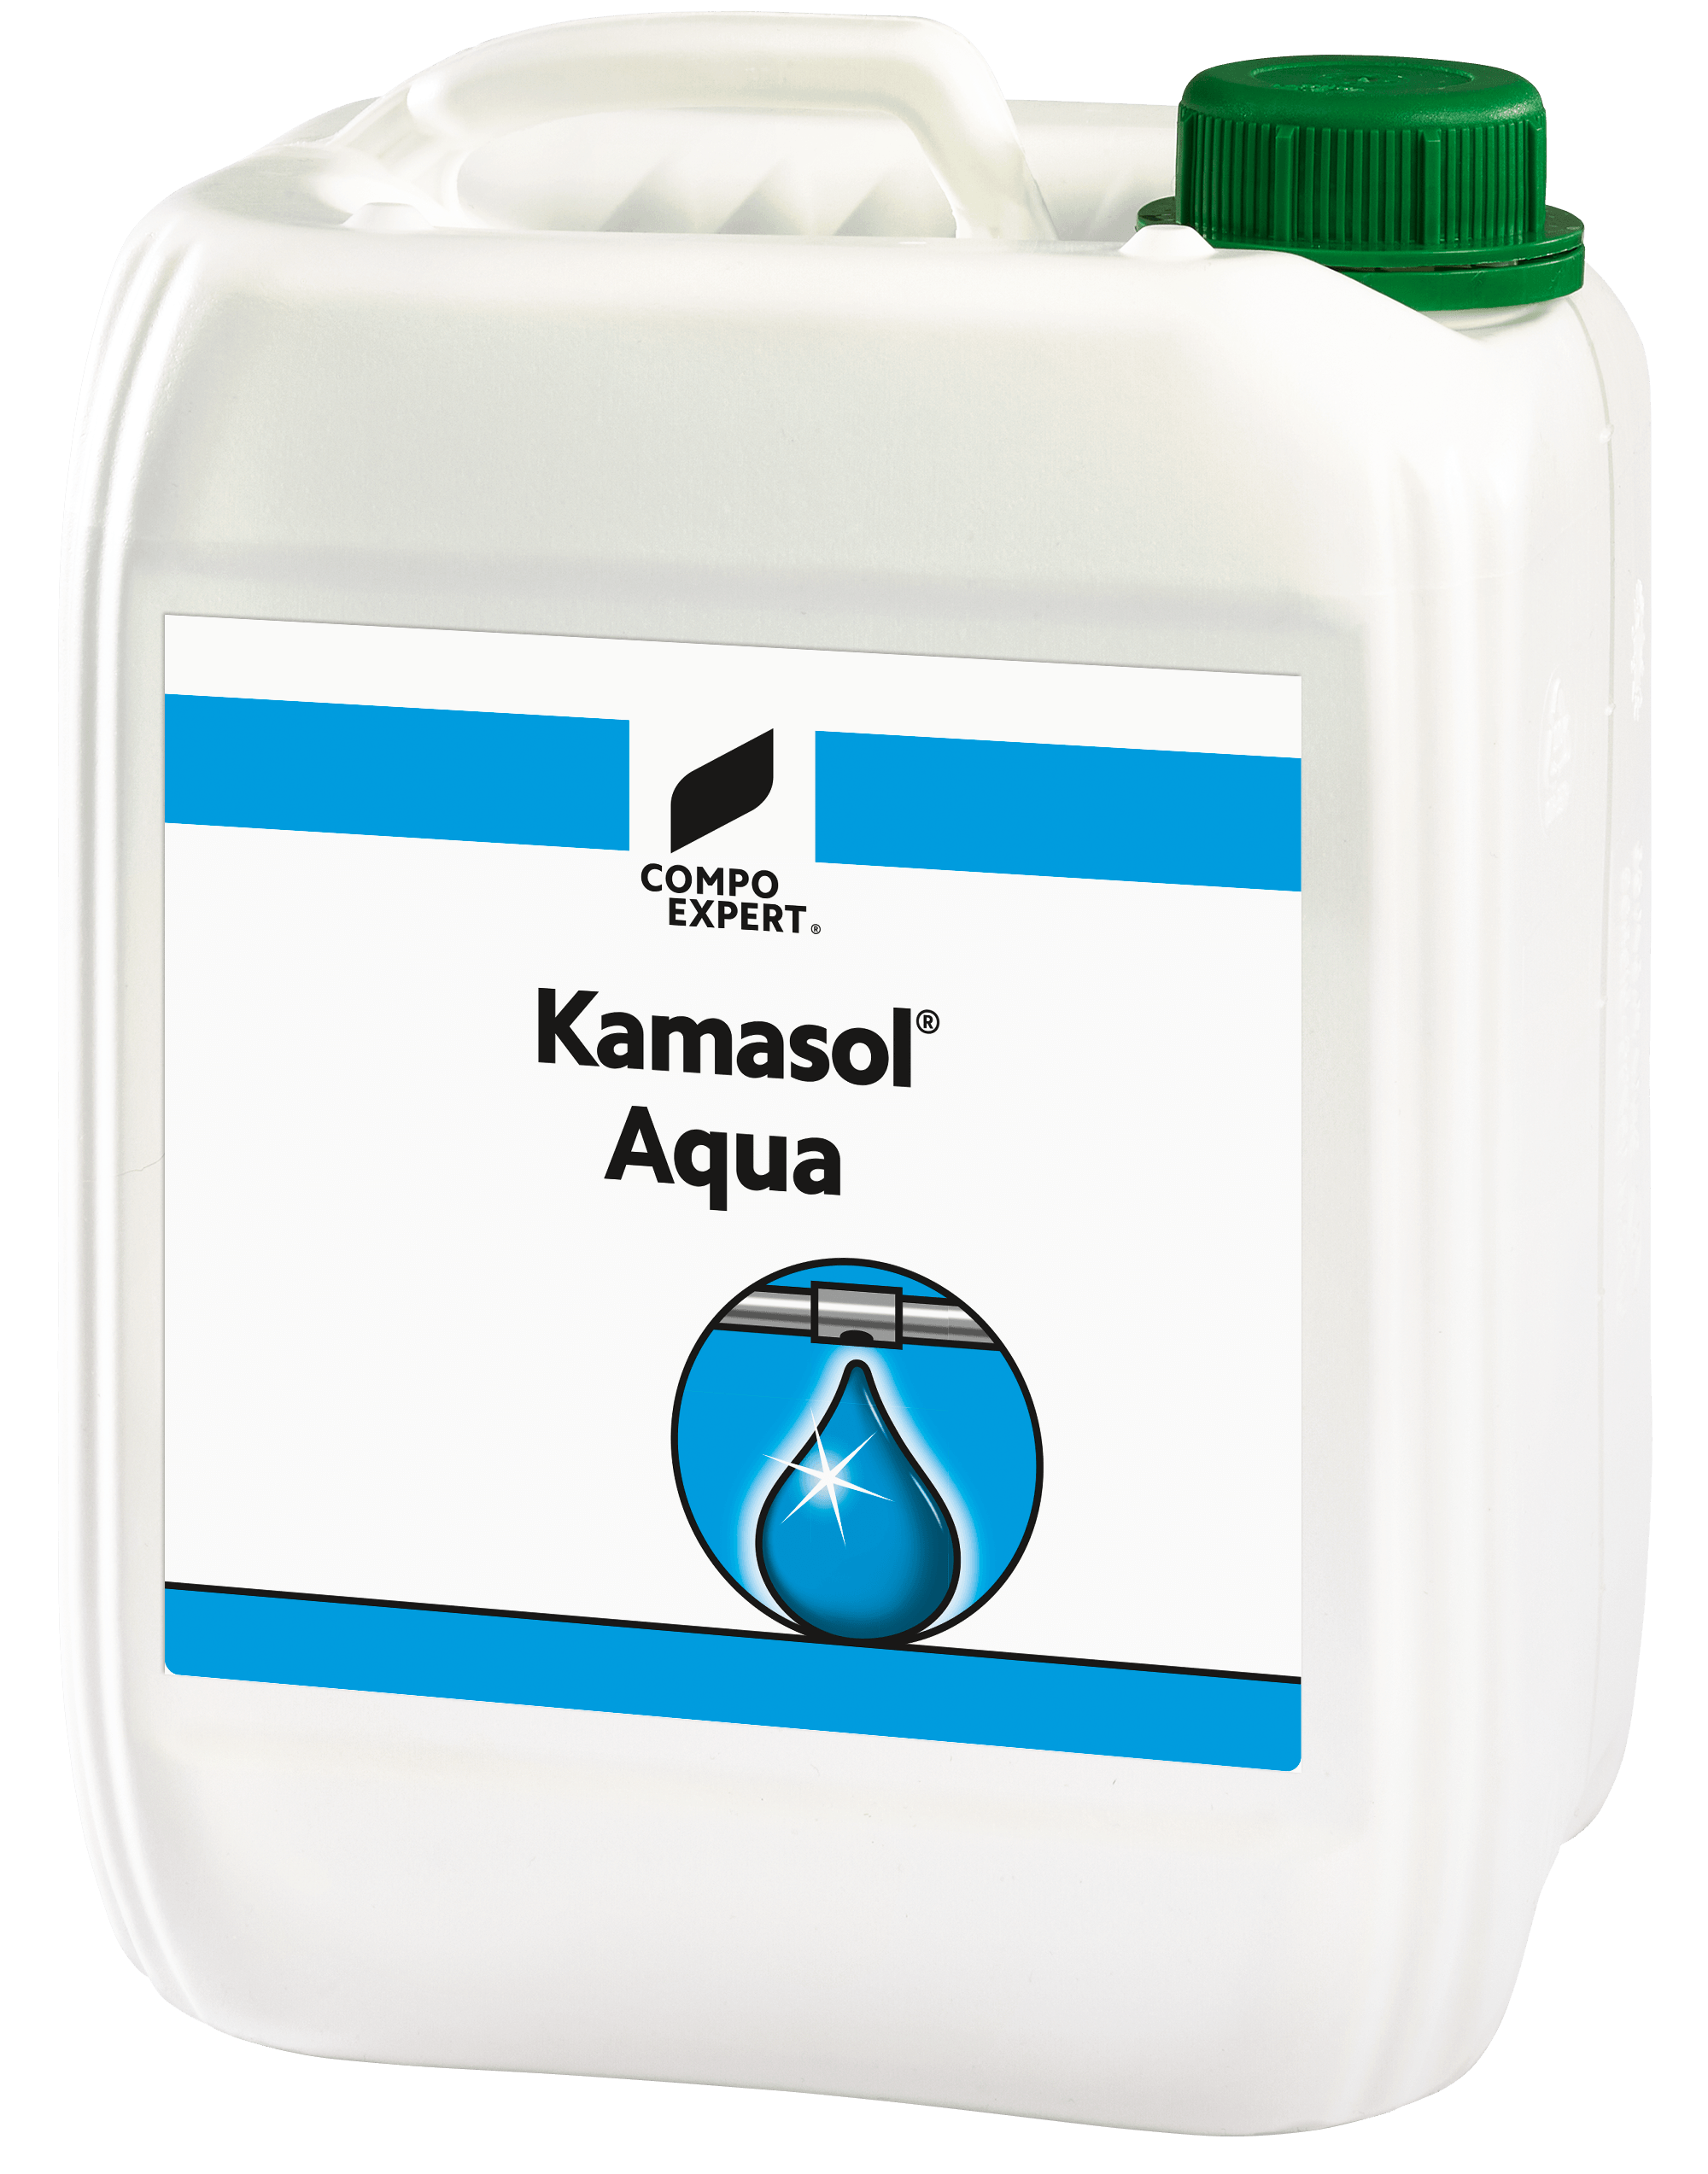 Compo-Expert - Kamasol Aqua (wetting agent)